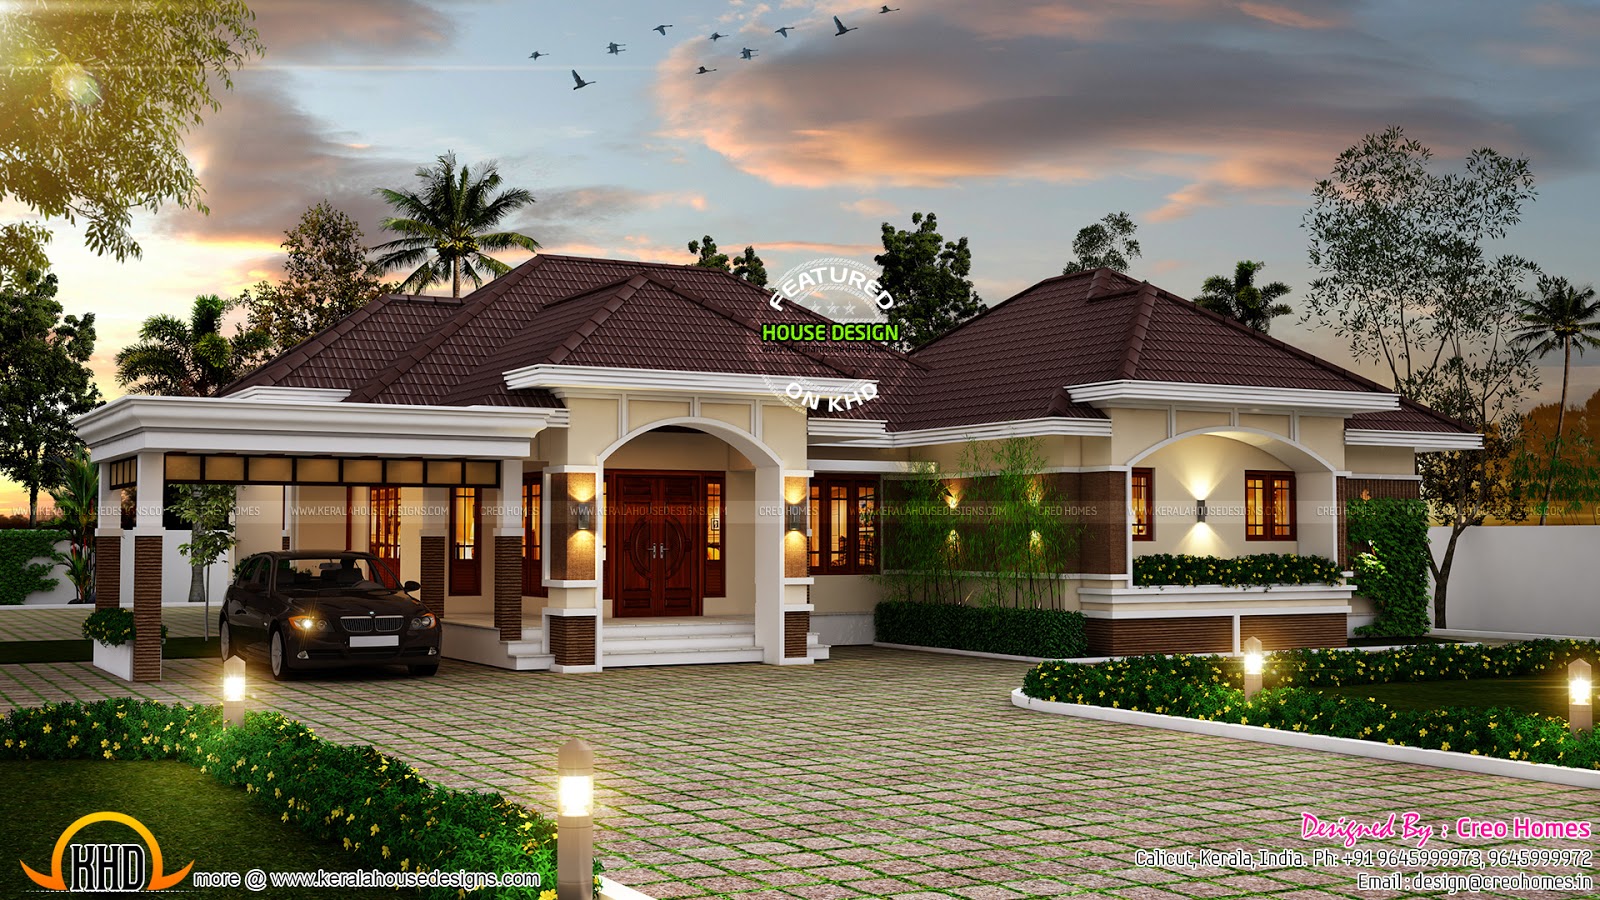 Outstanding bungalow  in Kerala  Kerala  home  design  and 